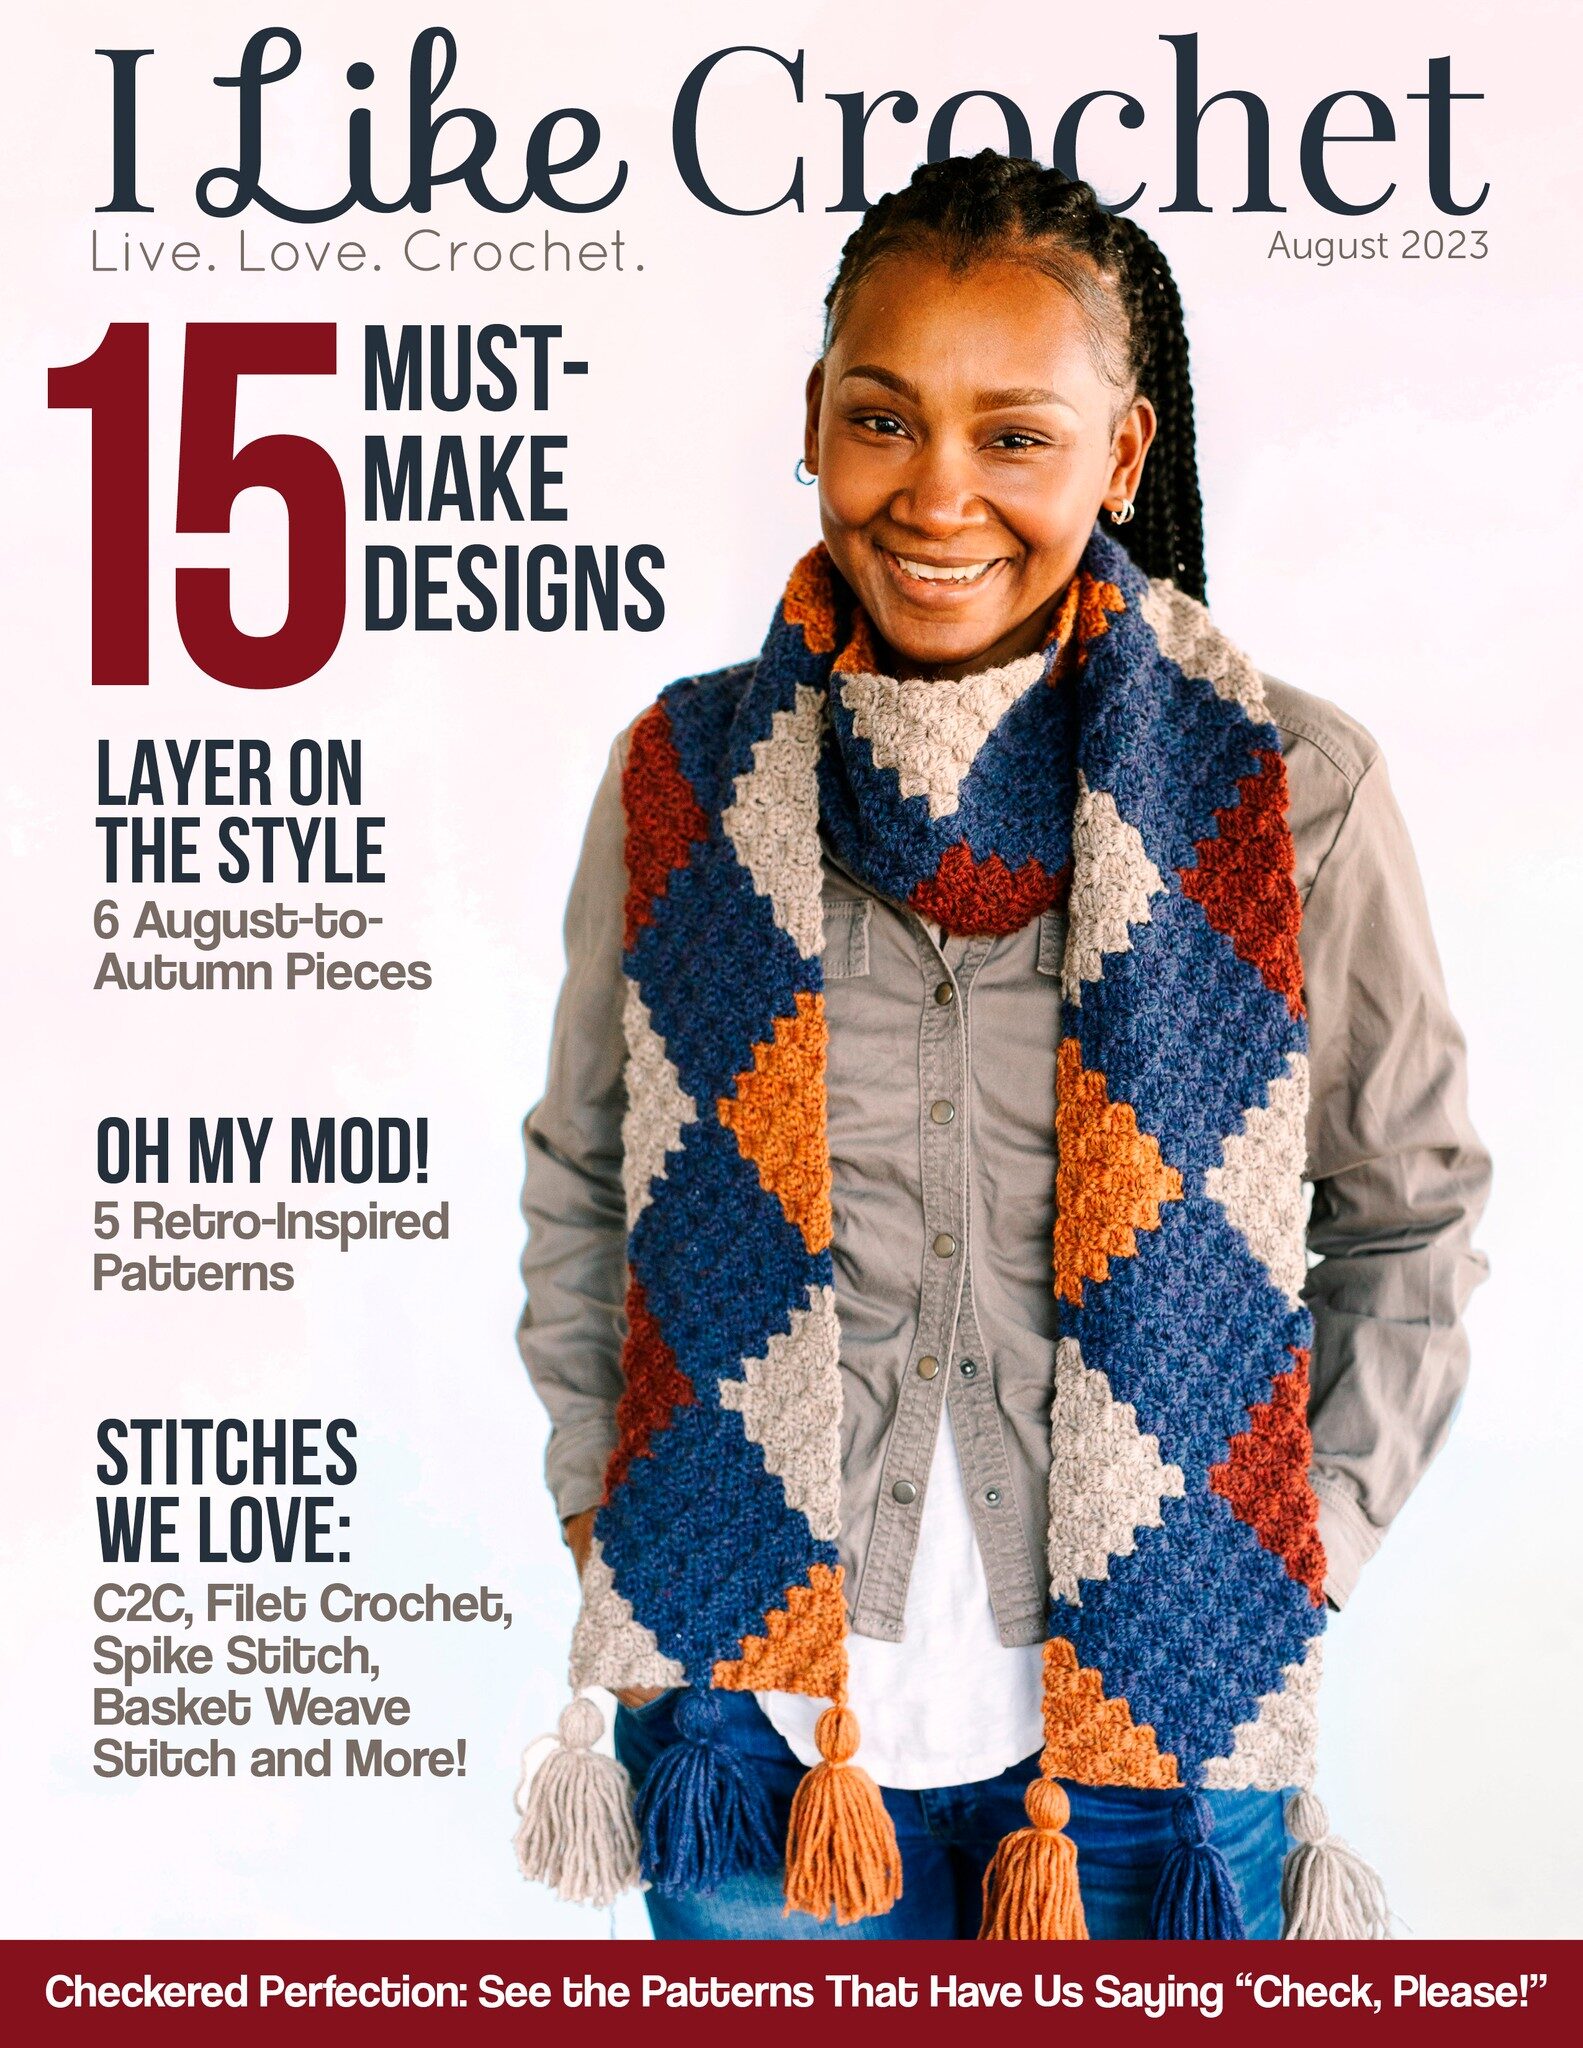 New! Furls Iris Odyssey Crochet Hooks • Oombawka Design Crochet